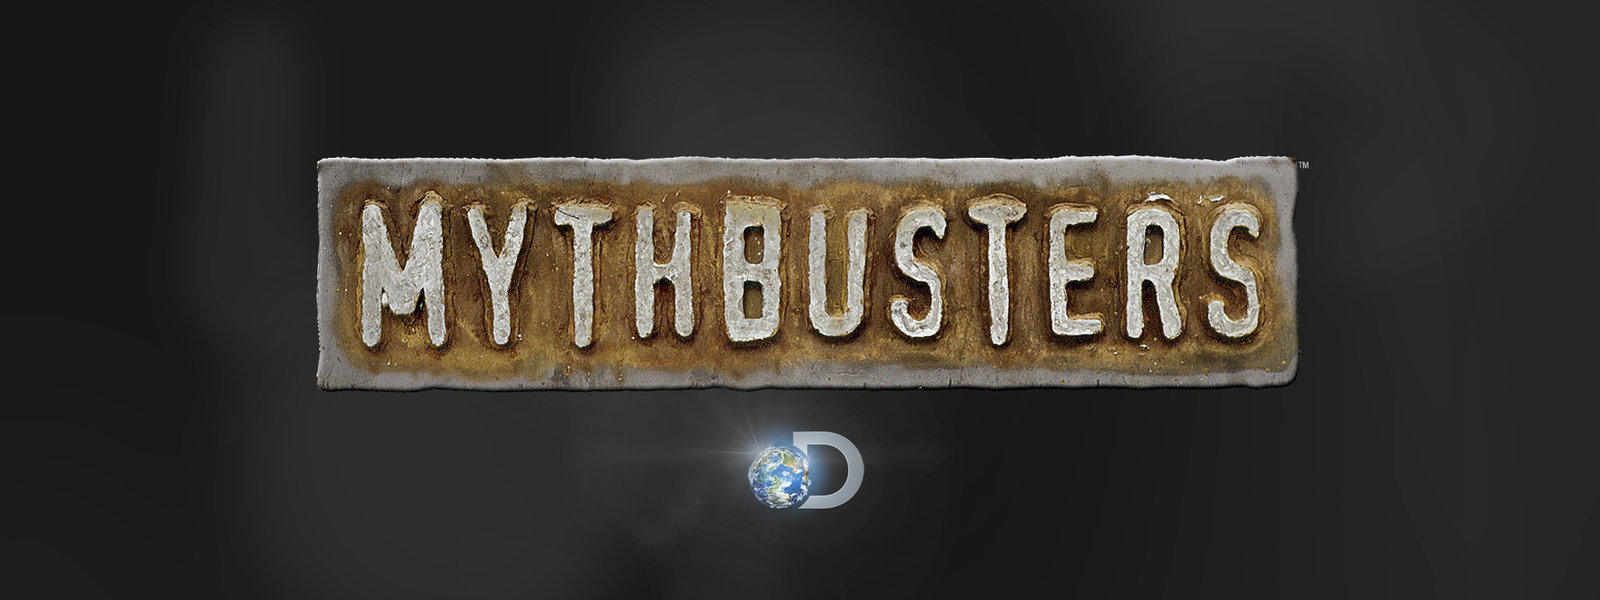 mythbusters-logo.jpg